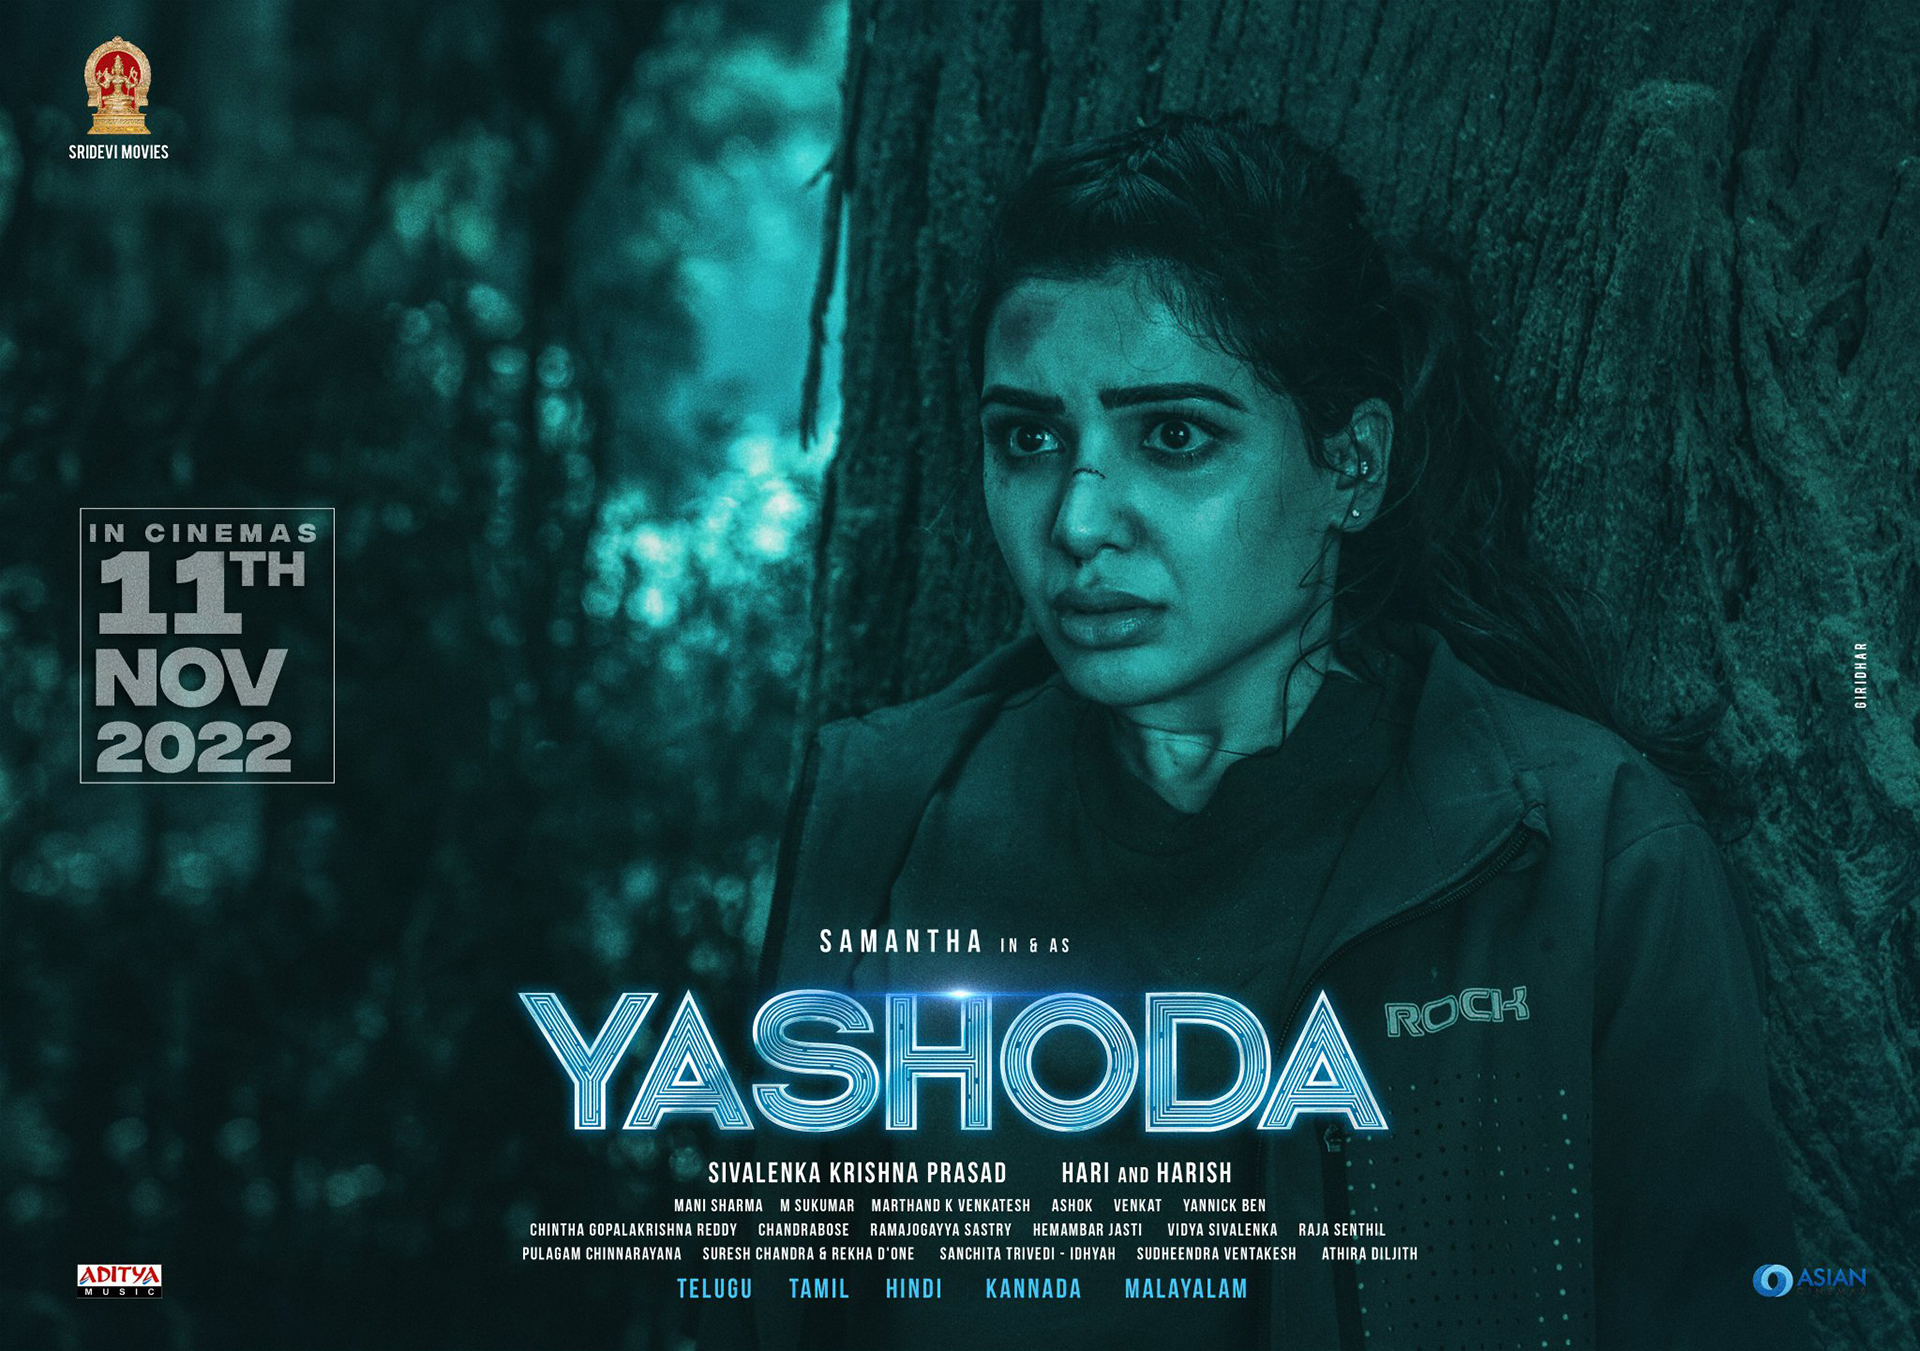 Varalaxmi in the latest release Yashoda alongside Samantha Prabhu